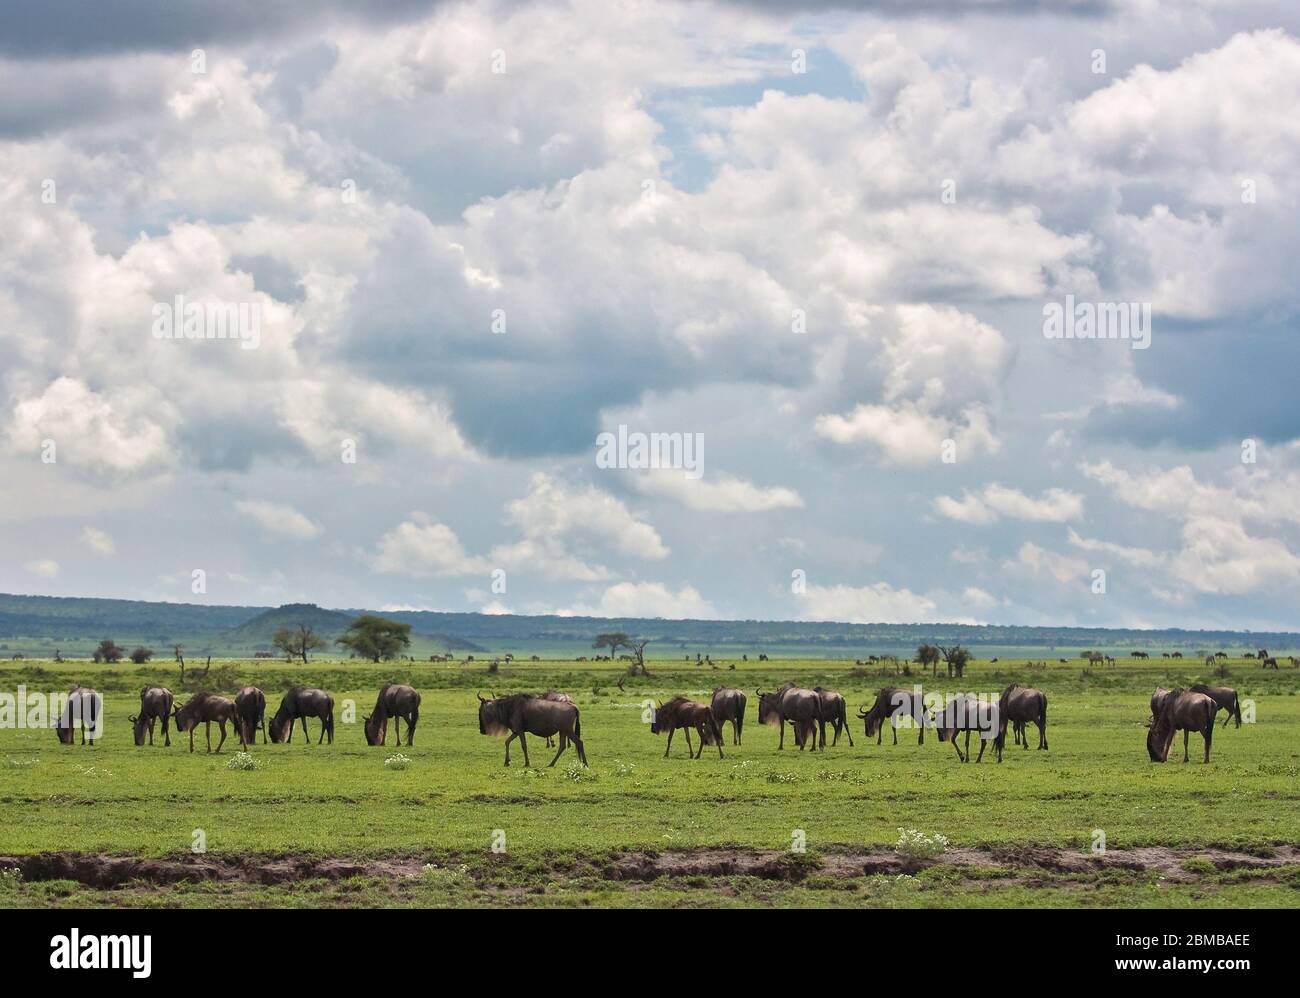 great migration of grazing wildebeests  on the boarder of Kenya and Tanzania savanna Serengeti and Masai mara Stock Photo